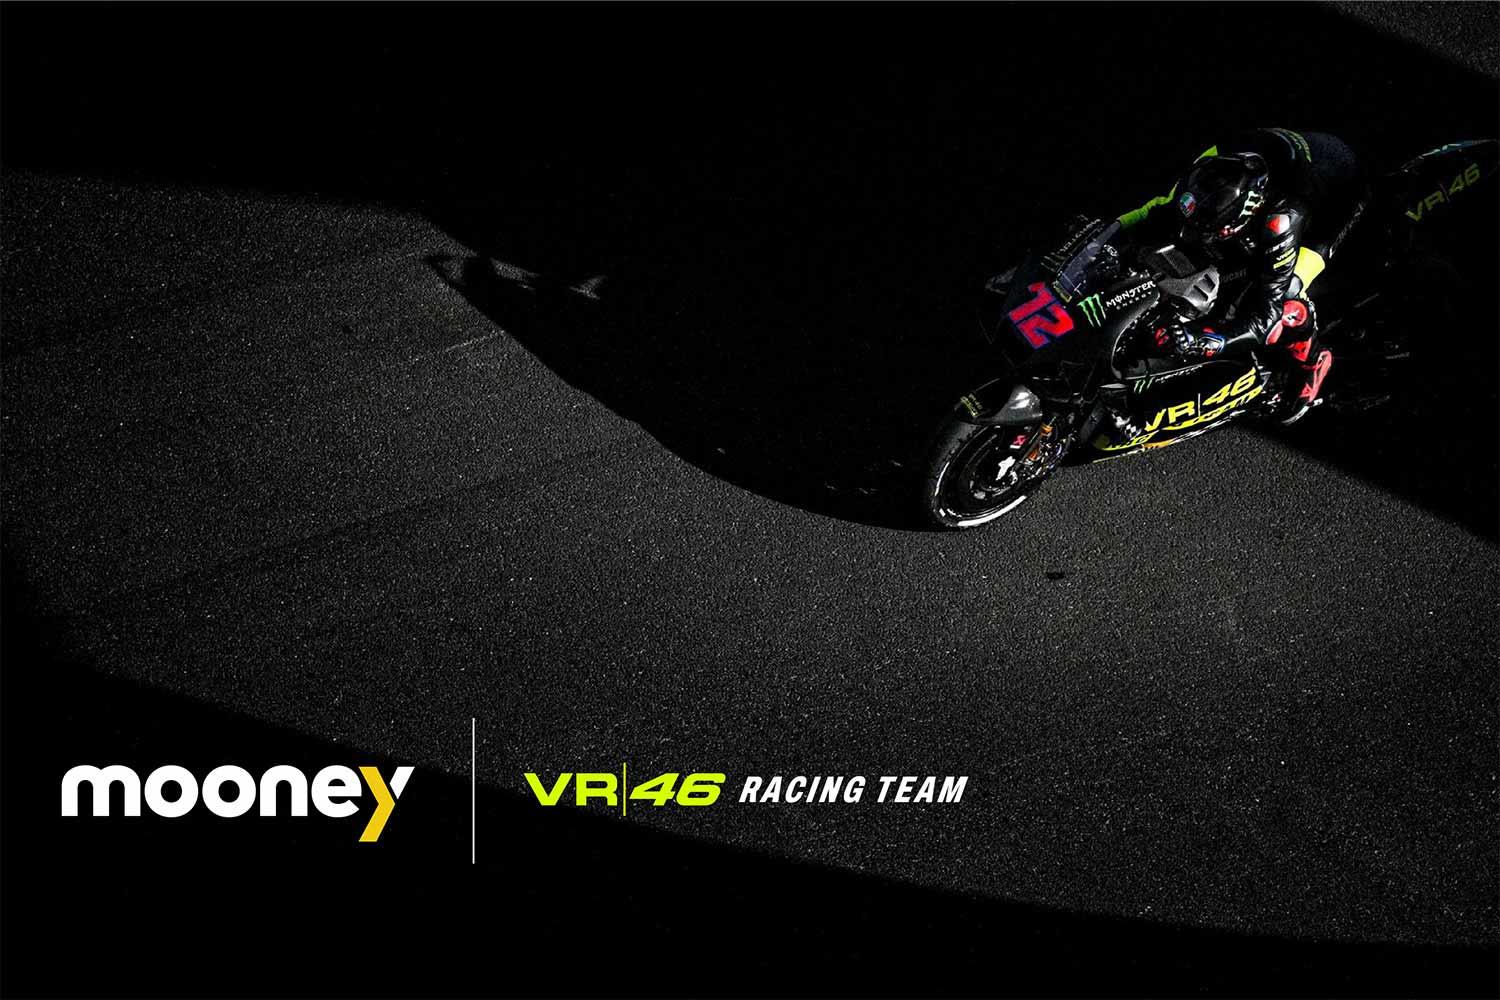 MotoGP: VR46 Racing Team and Mooney reveal global partnership | MCN